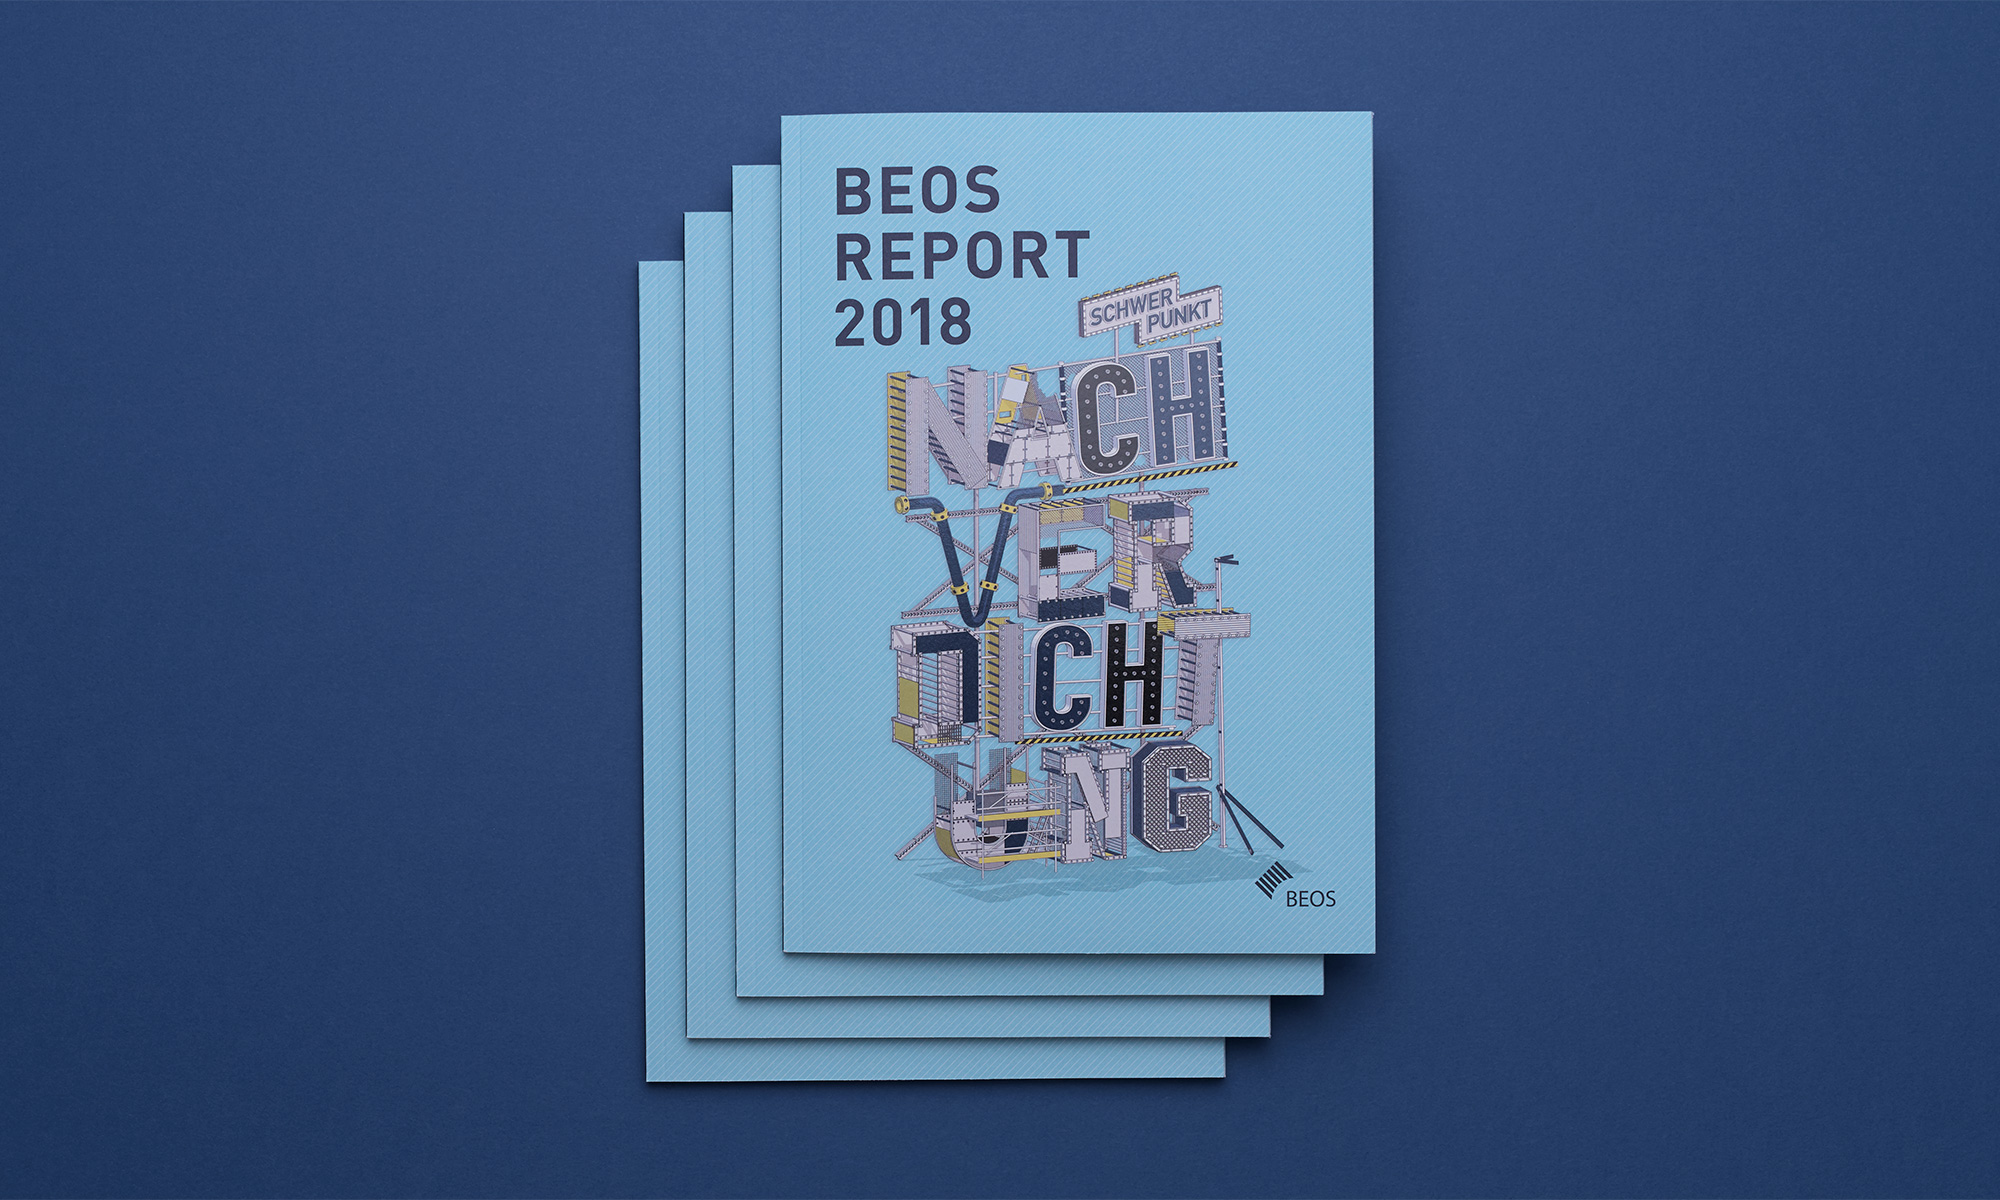 BEOS Report 2018